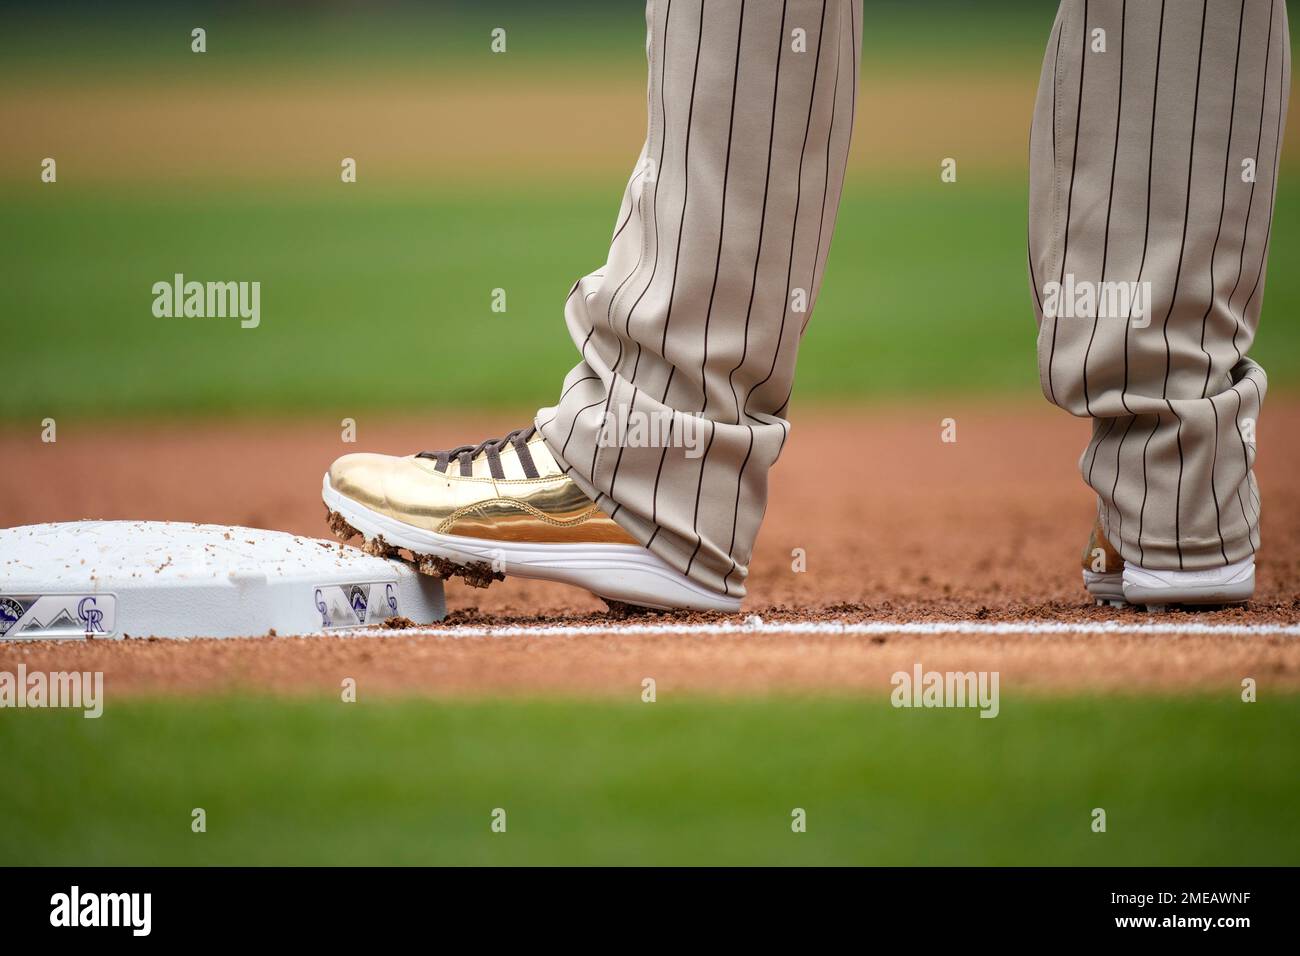 DENVER, CO - JUNE 9: San Diego Padres third baseman Manny Machado